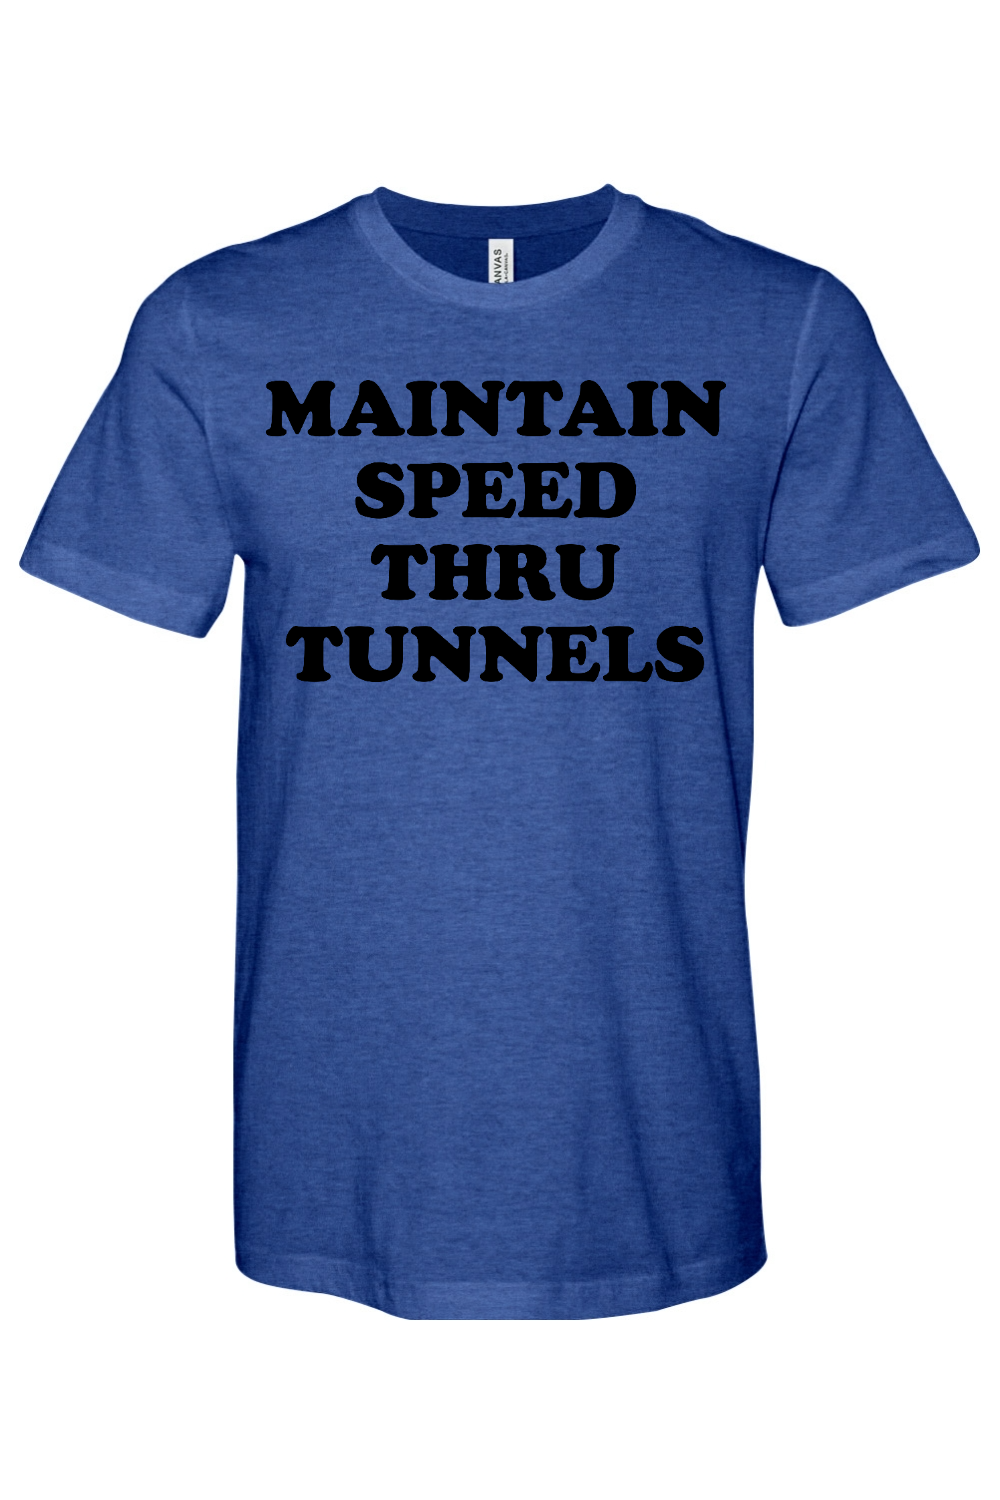 Maintain Speed Thru Tunnels - Bella + Canvas Jersey Tee - Yinzylvania